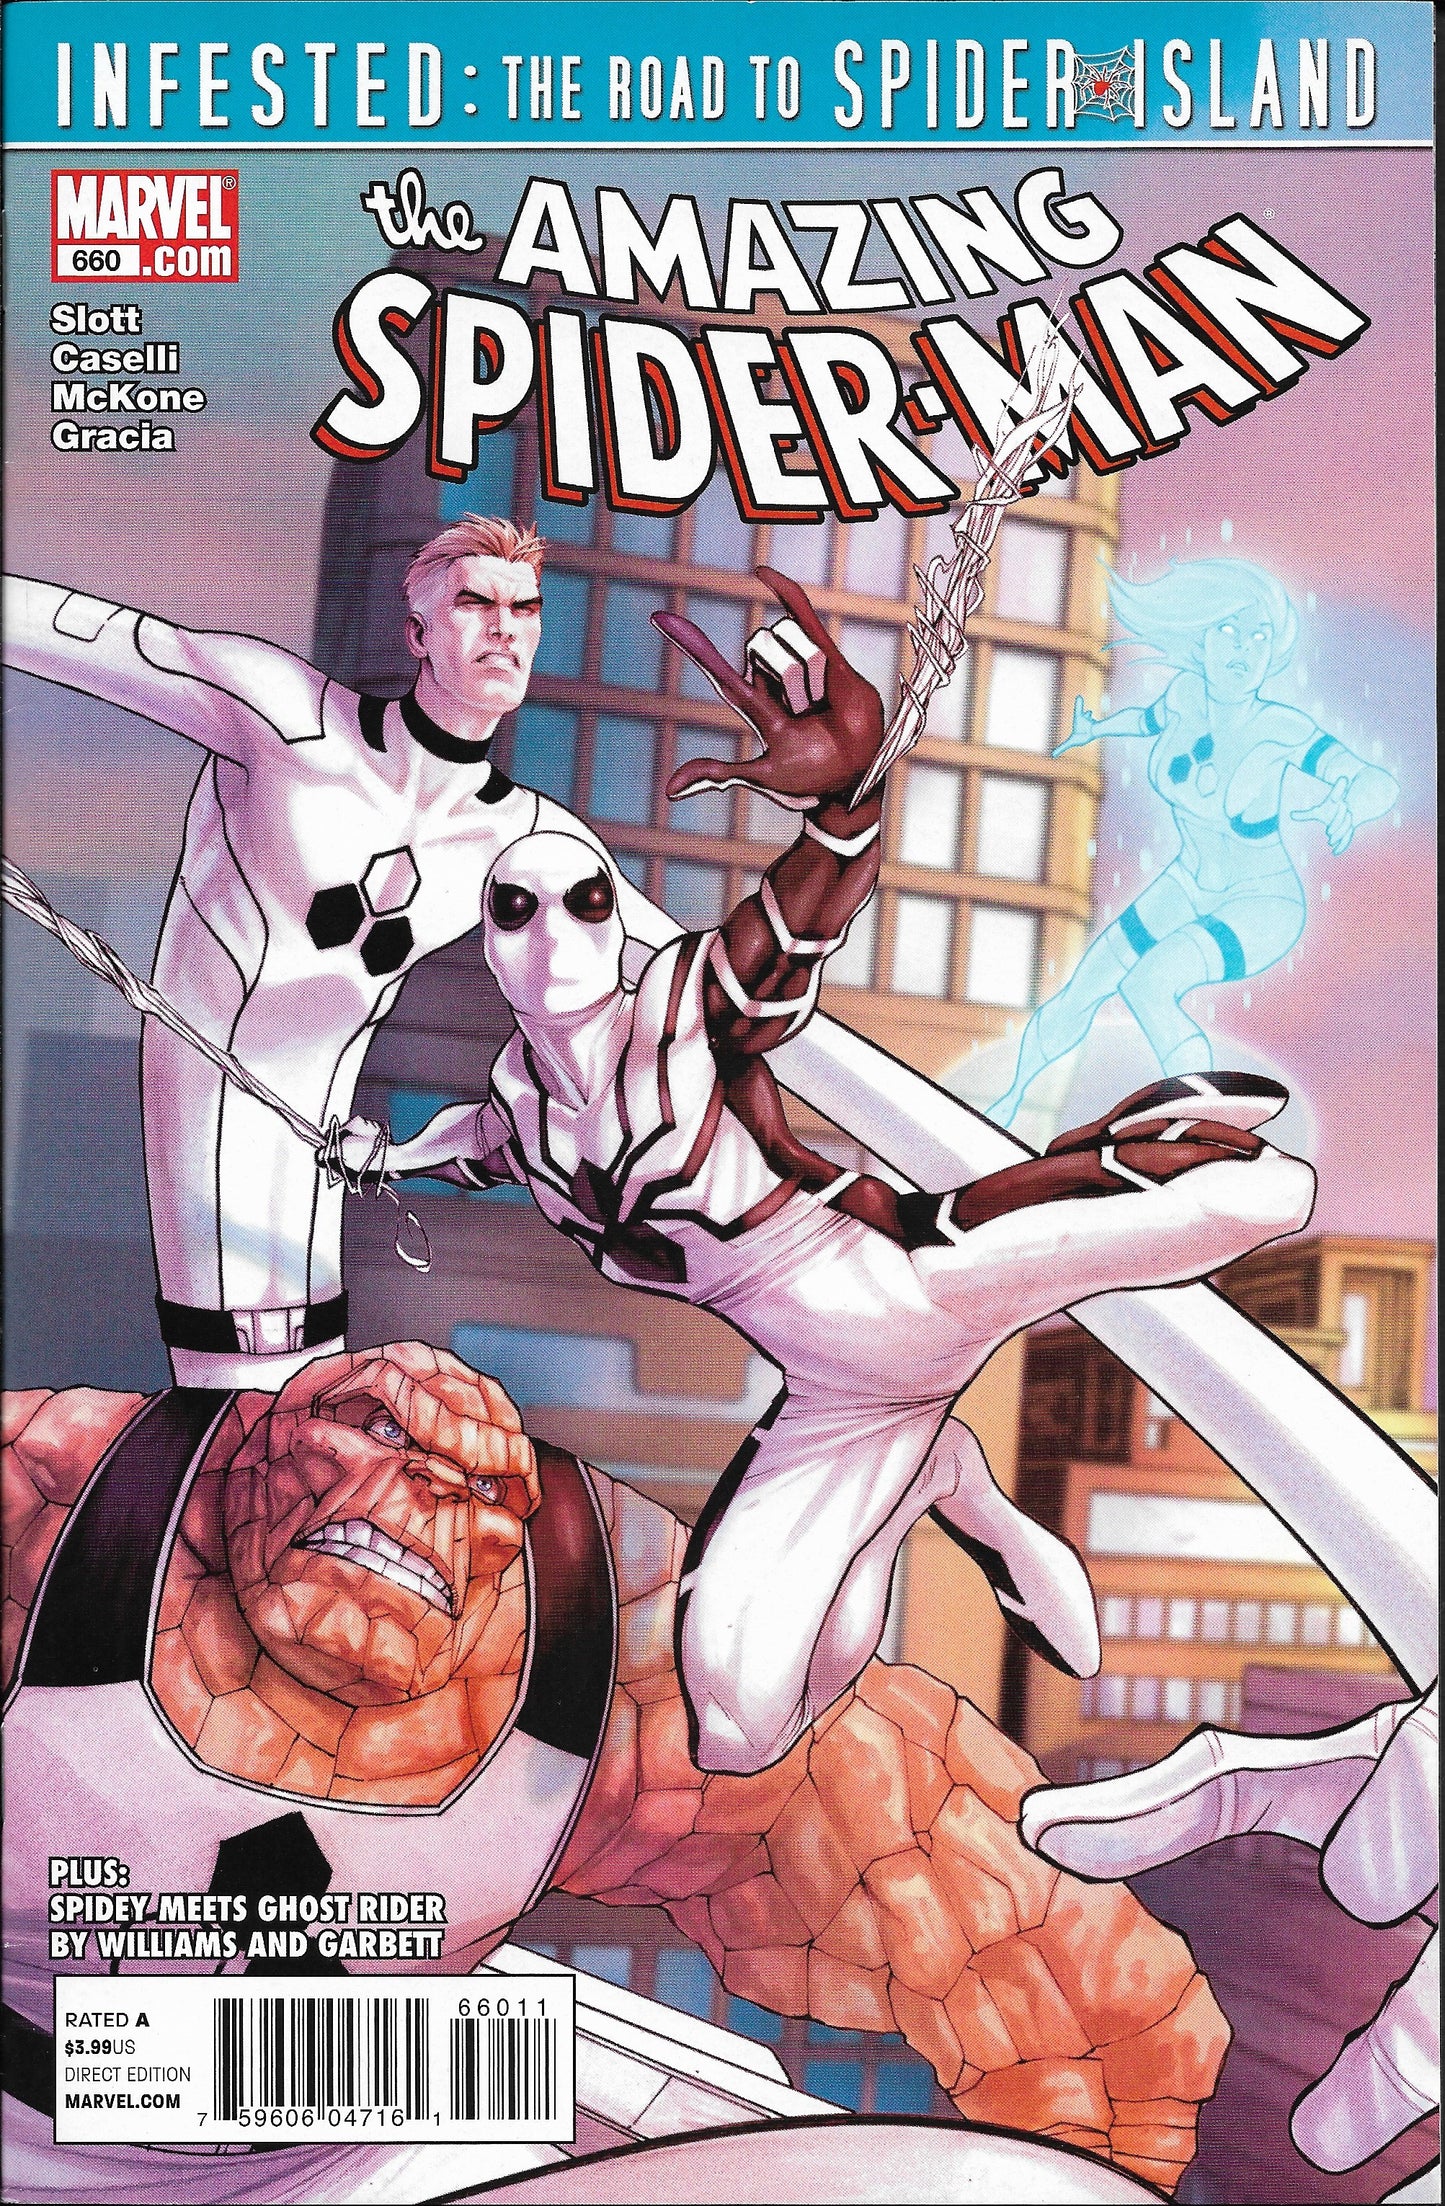 The Amazing Spider-Man #660 (Marvel 1998)